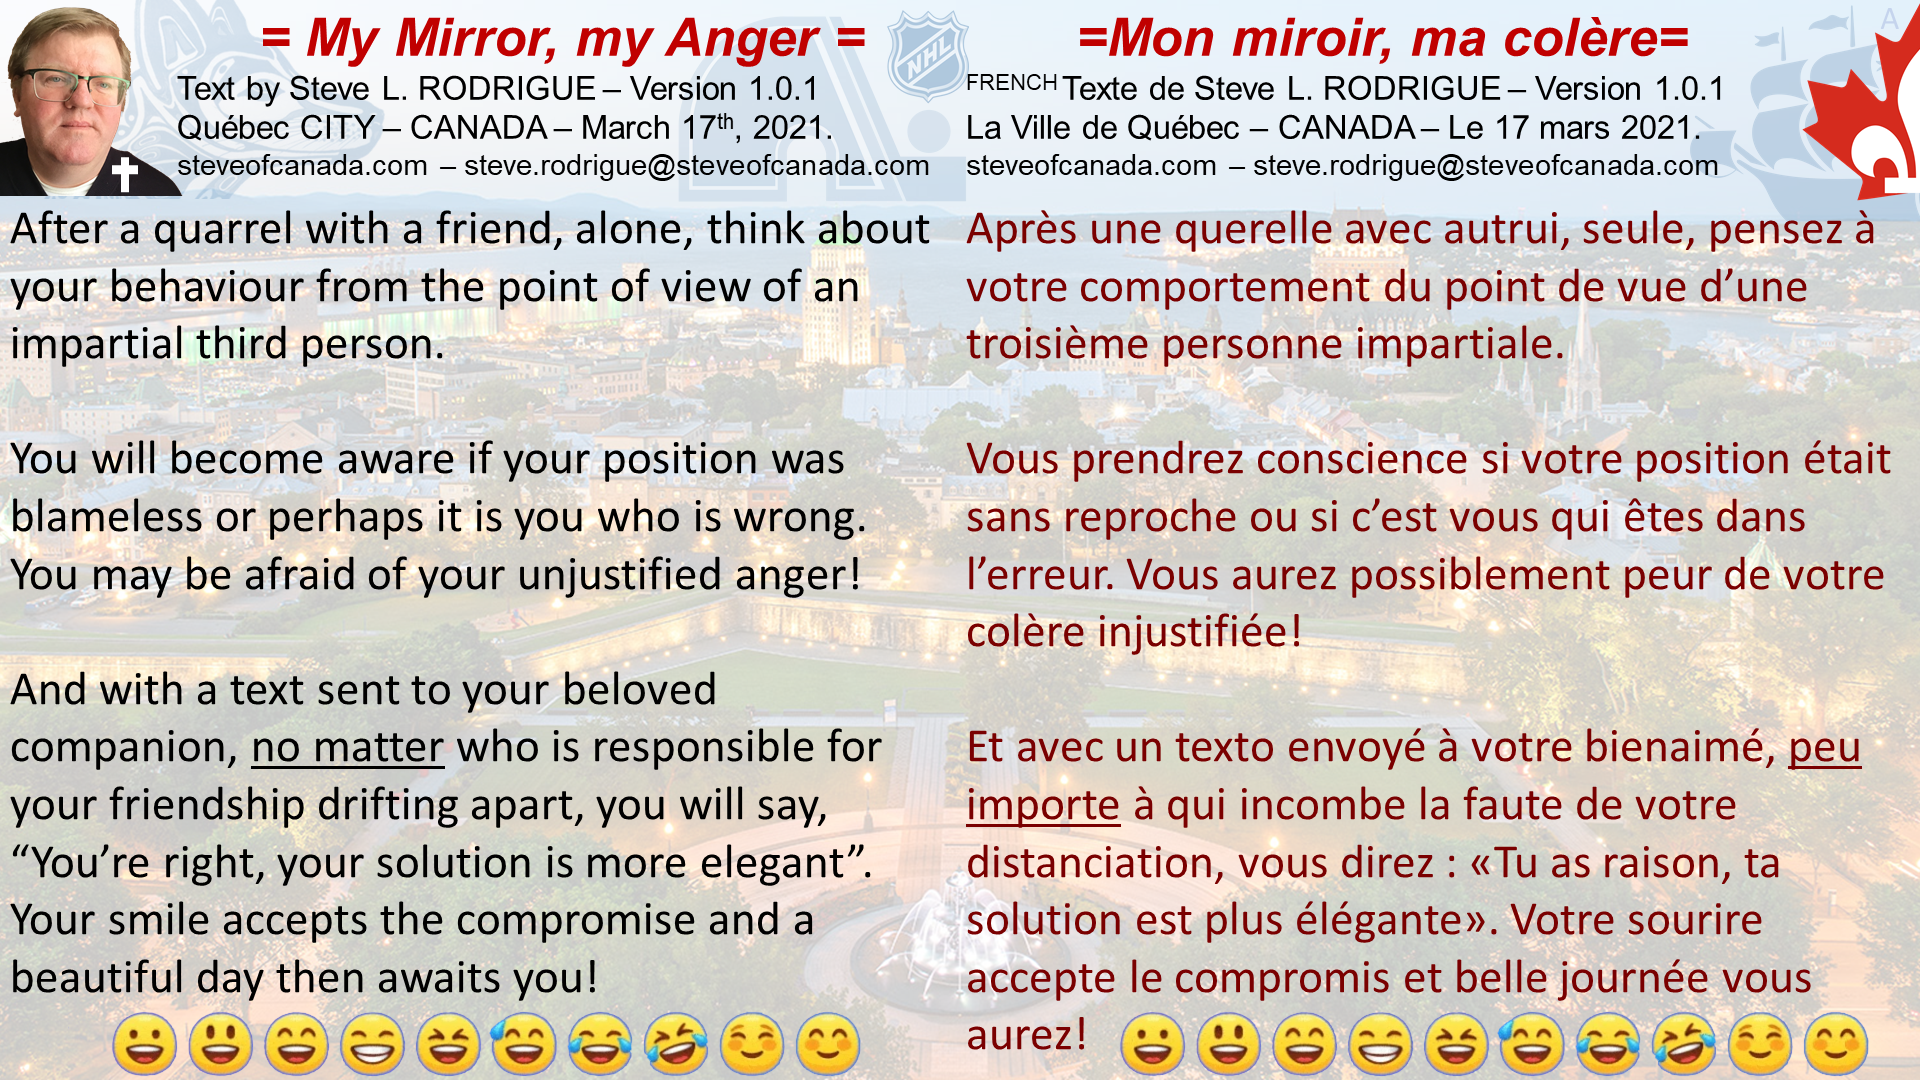 My mirror, my anger